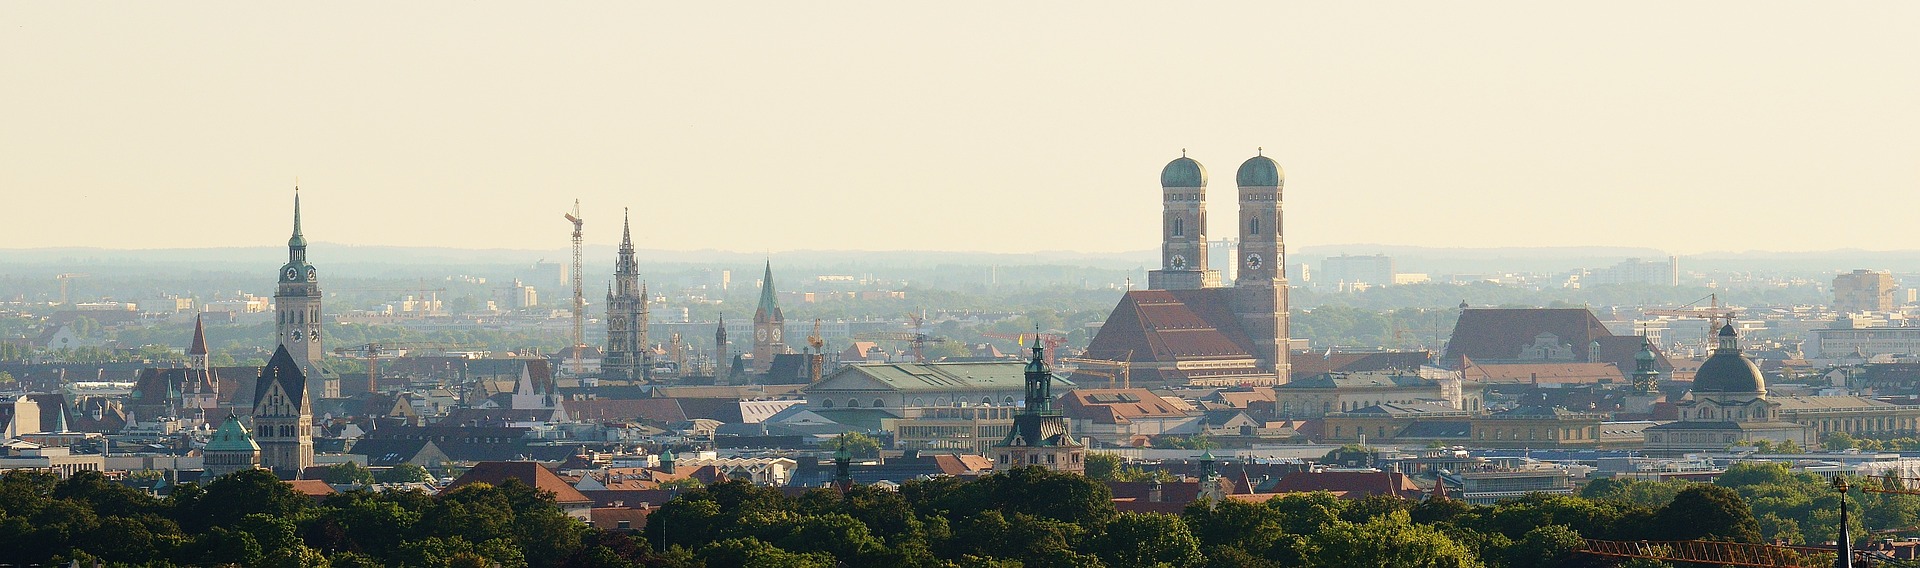 skyline Munich, tweetyspics, https://pixabay.com